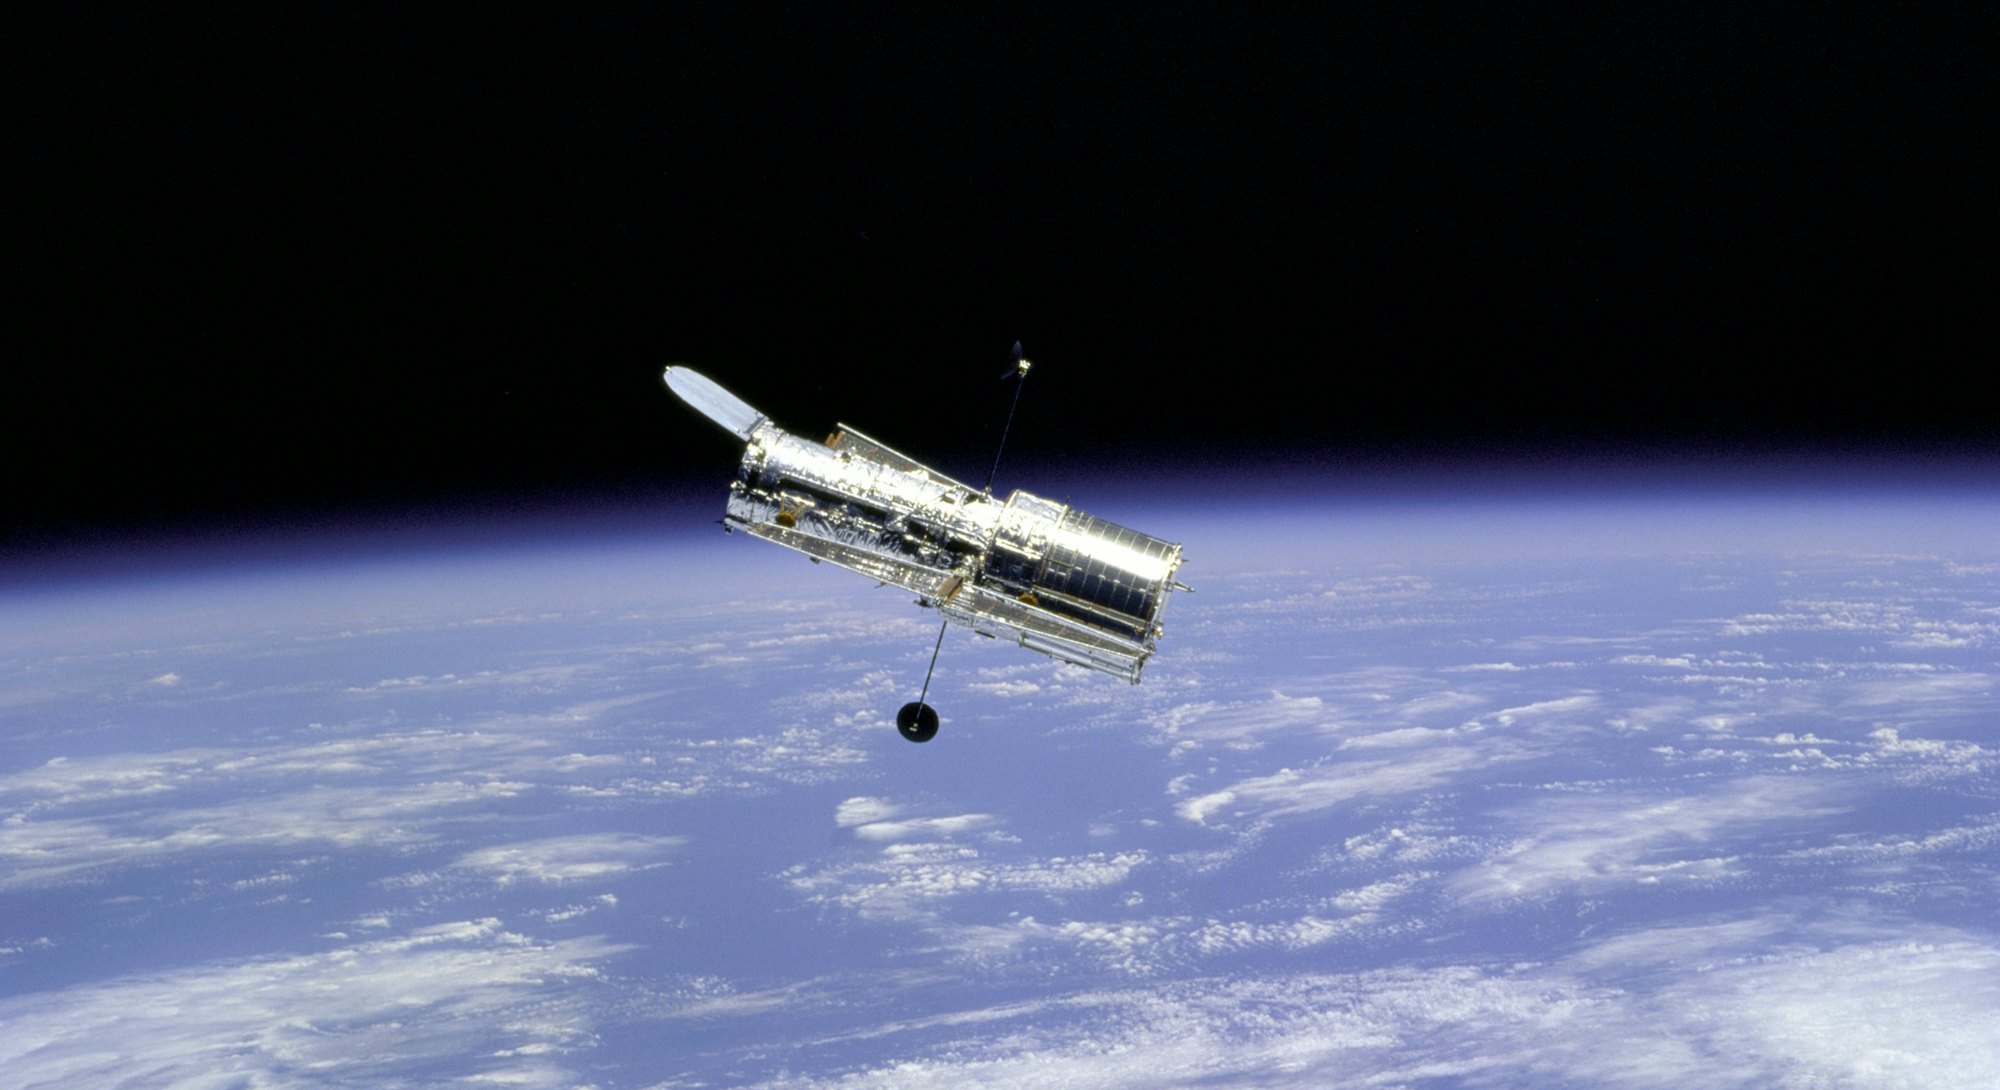 Hubble Space Telescope and Earth Limb, 1997. Flyaround of the Hubble Space Telescope (HST) after dep...